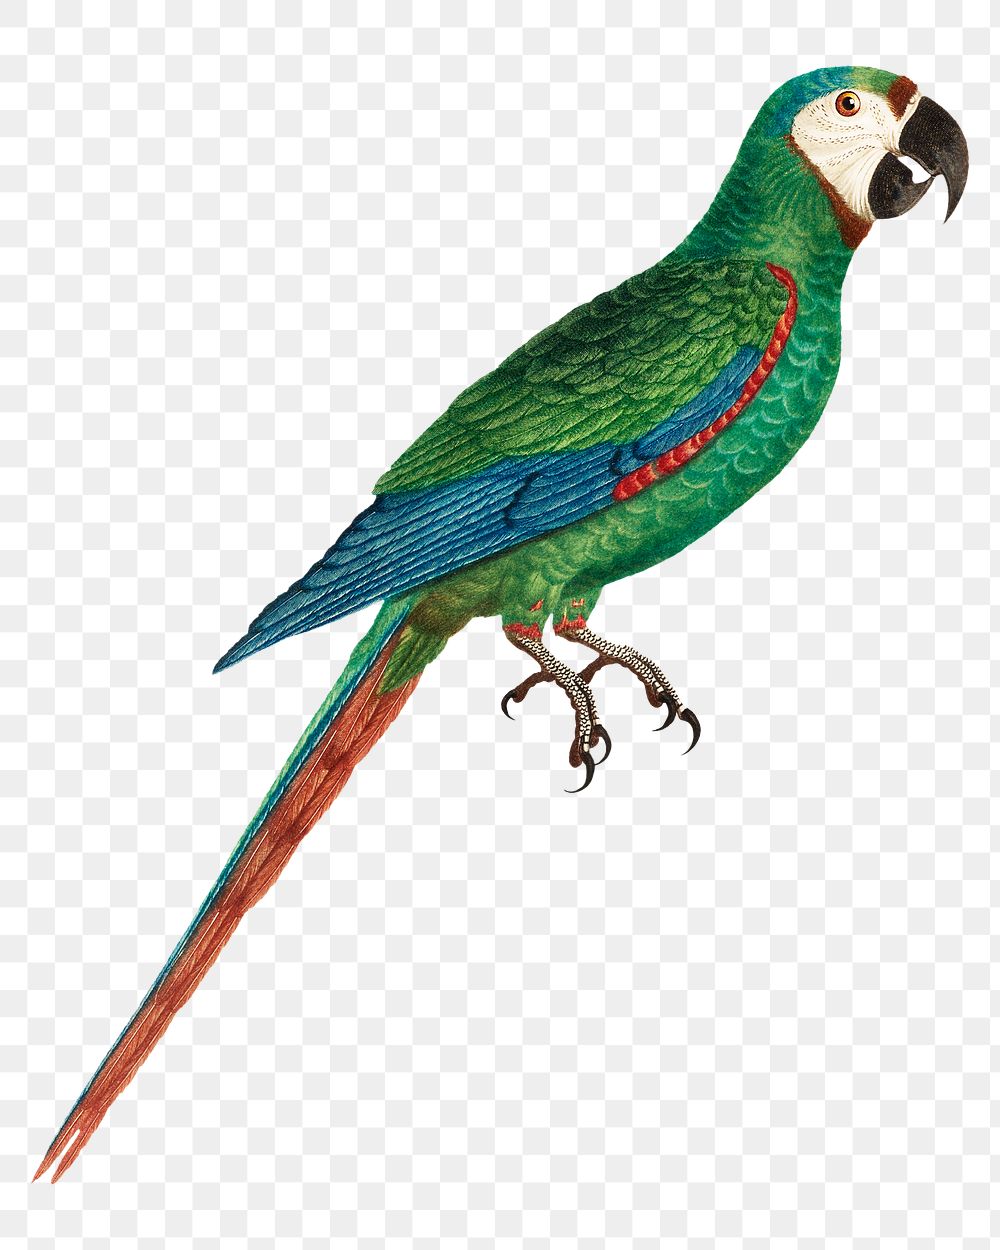 Blue-winged macaw parrot png bird sticker, vintage animal illustration, transparent background